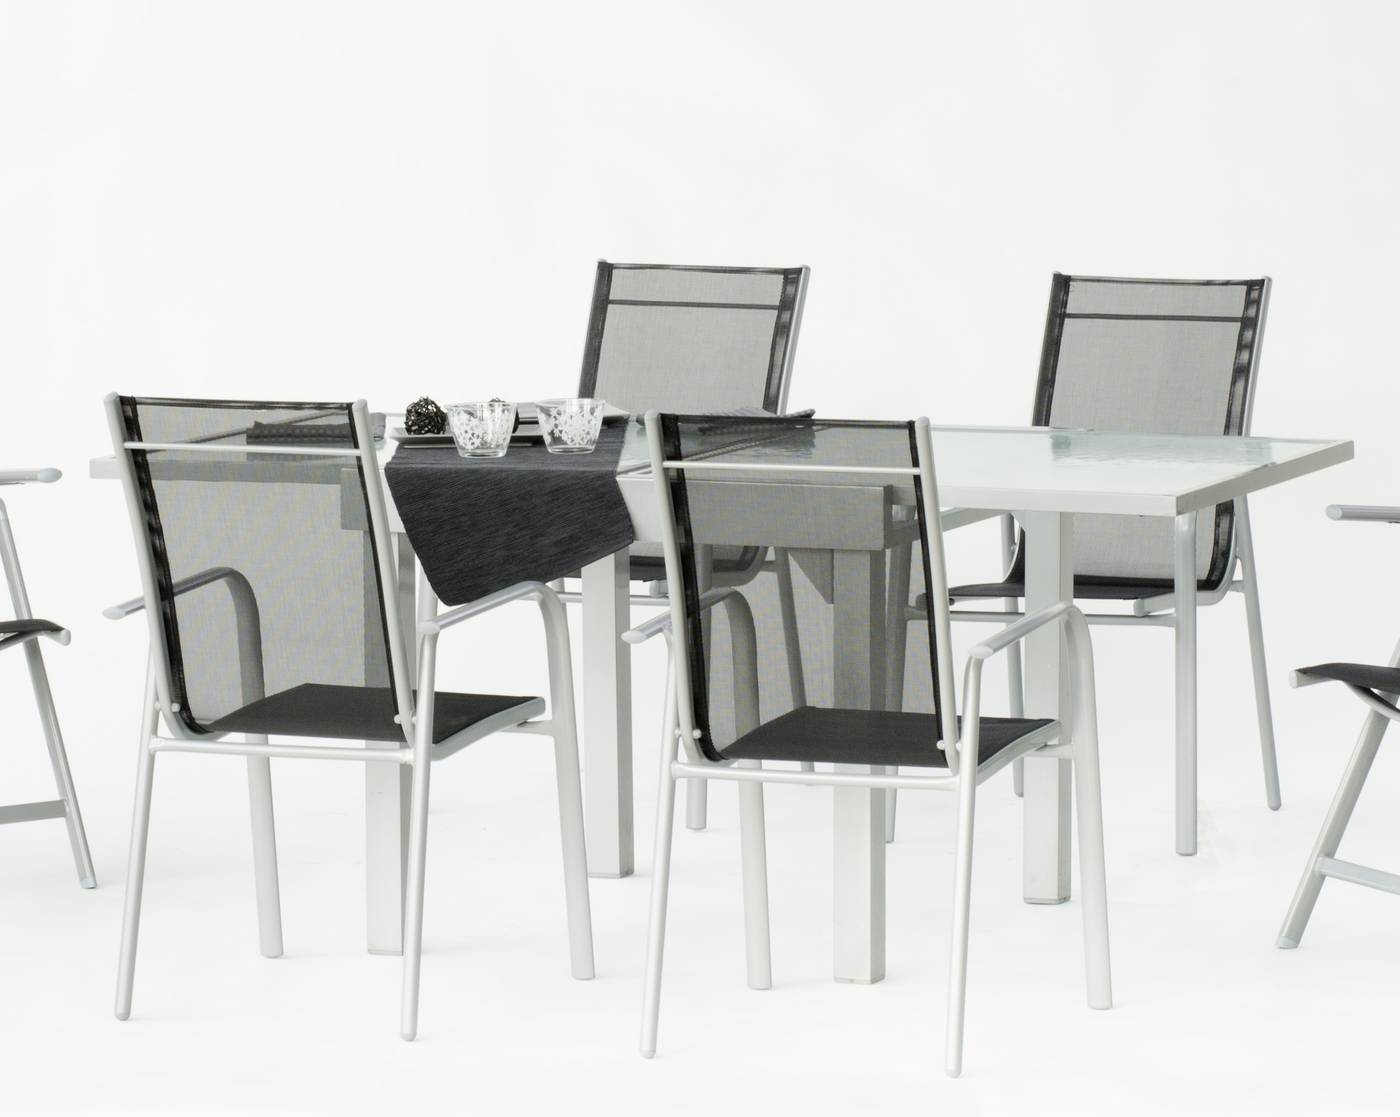 Sillón Aluminio Nora - Sillón de aluminio color plata y asiento de Textilen, para jardín y terraza